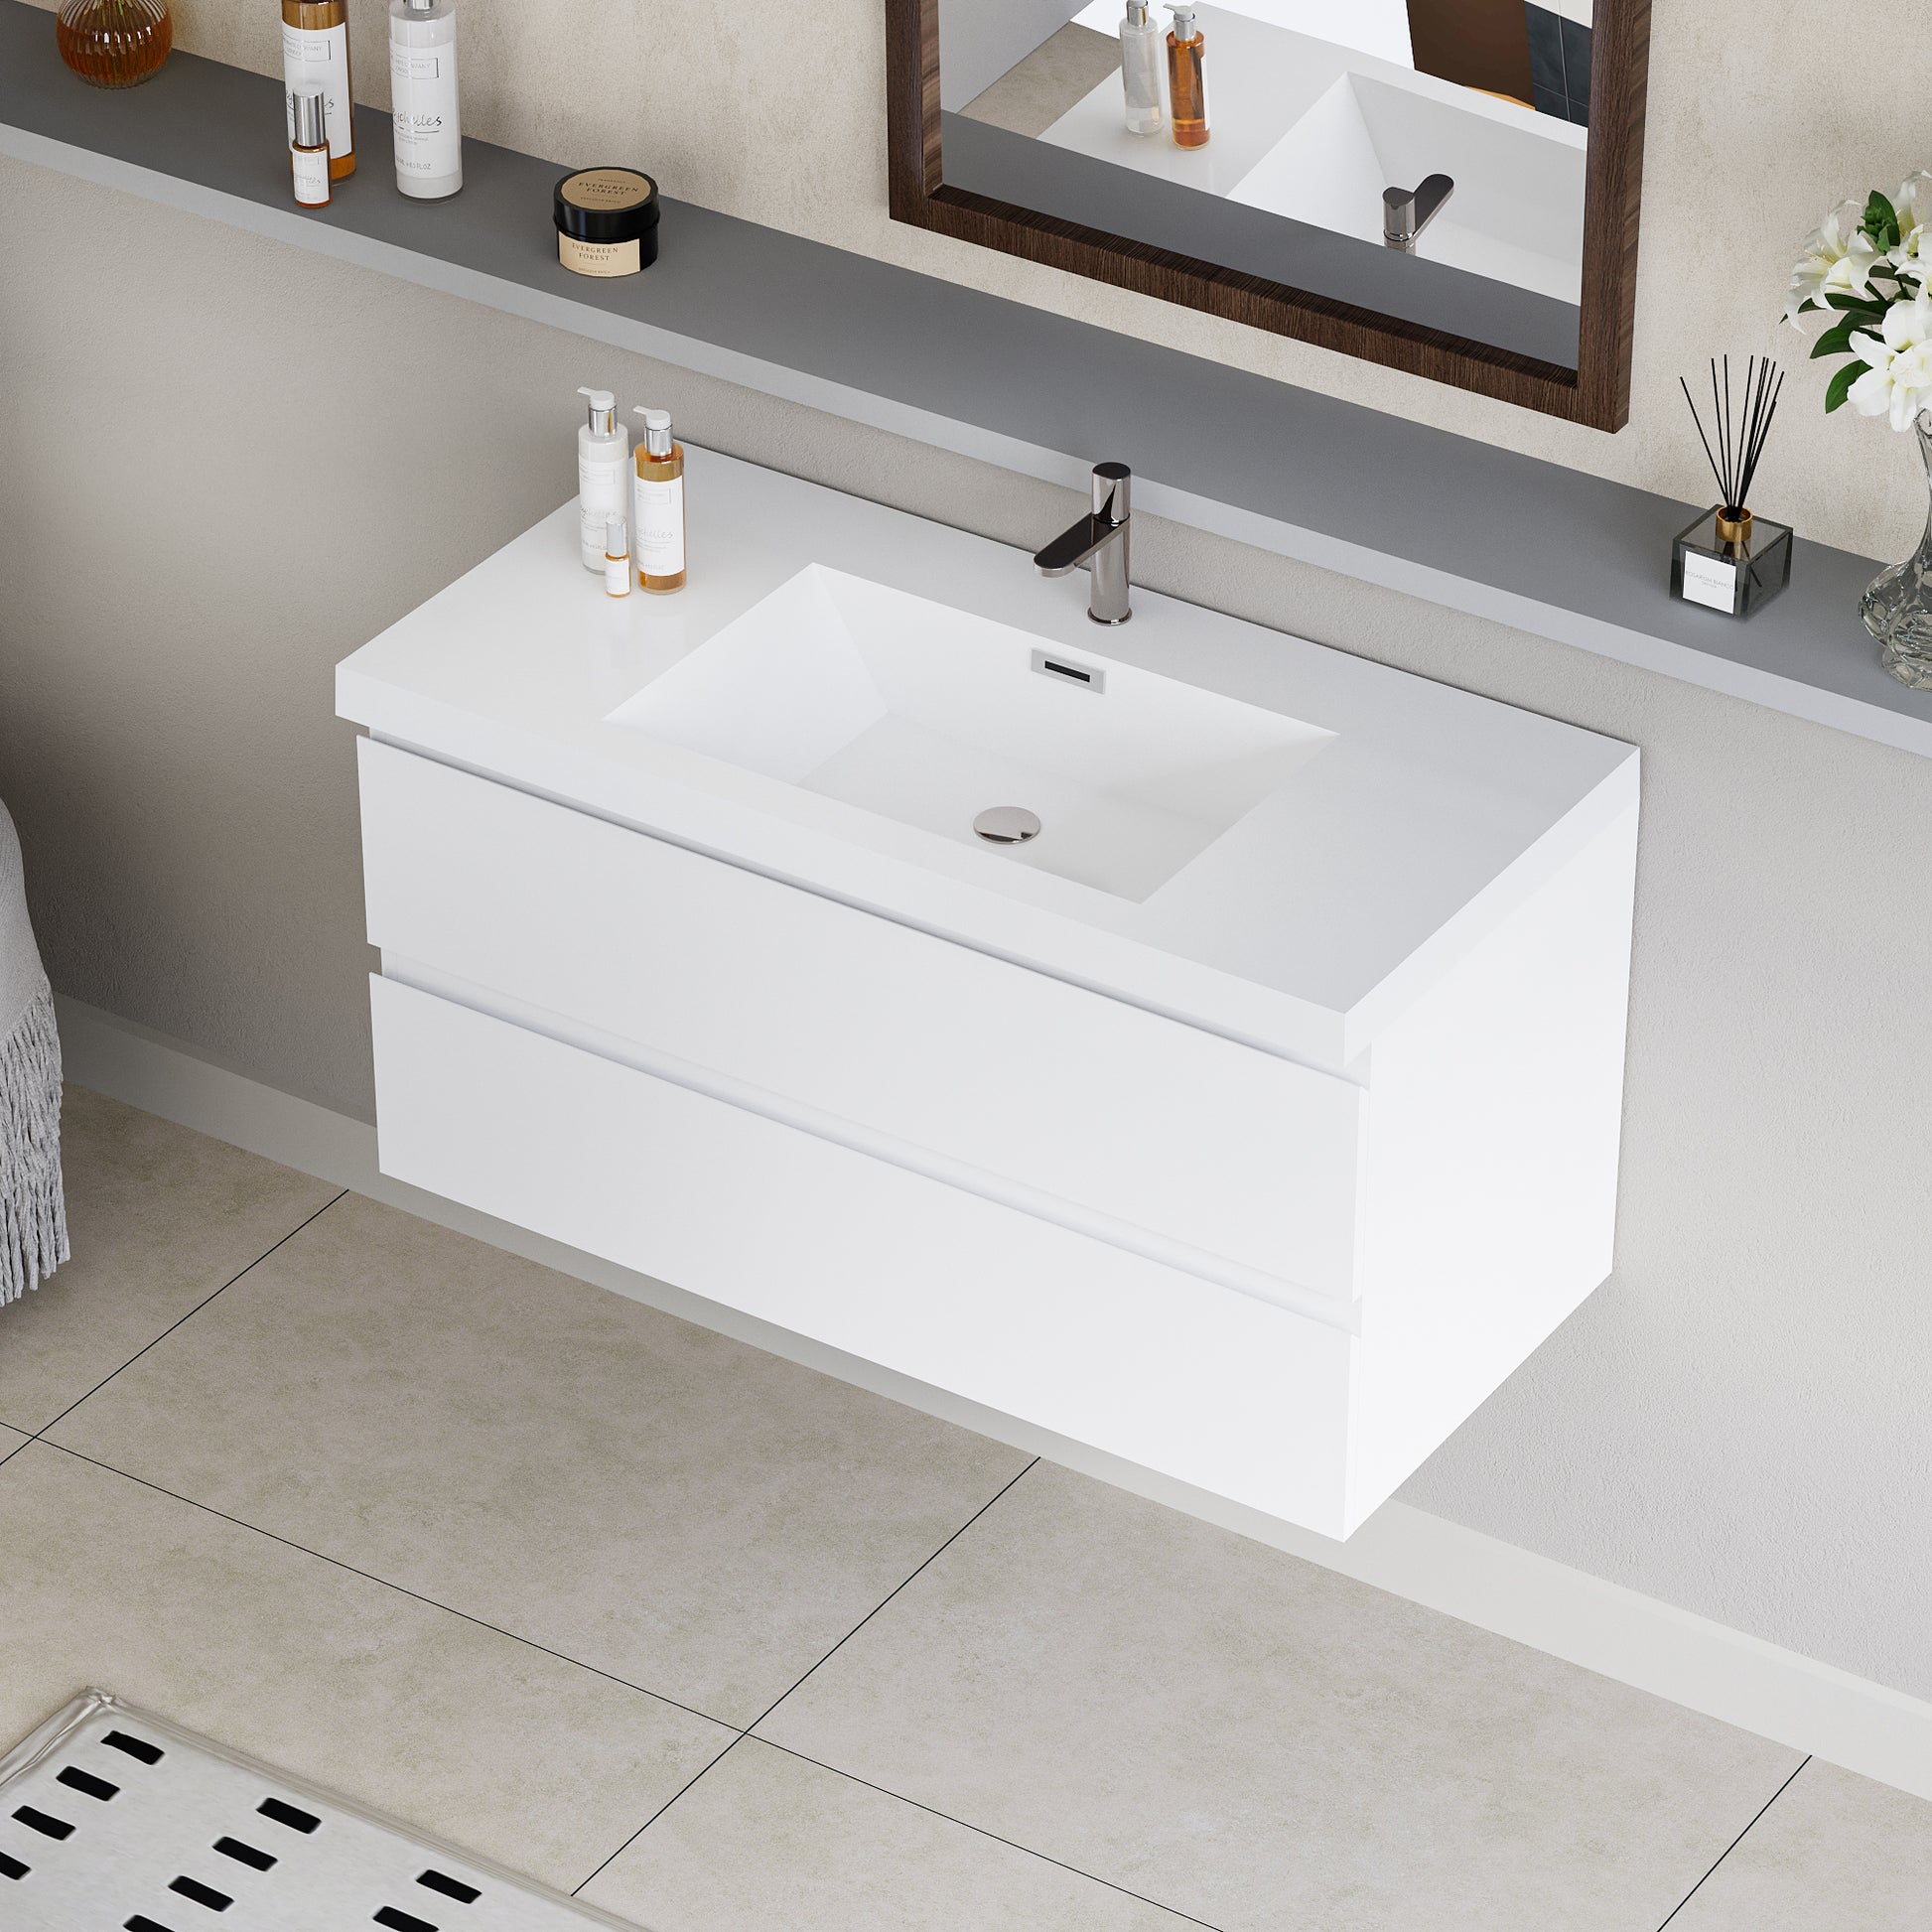 42" Floating Bathroom Vanity with Sink, Modern Wall 2-white-bathroom-wall mounted-mdf